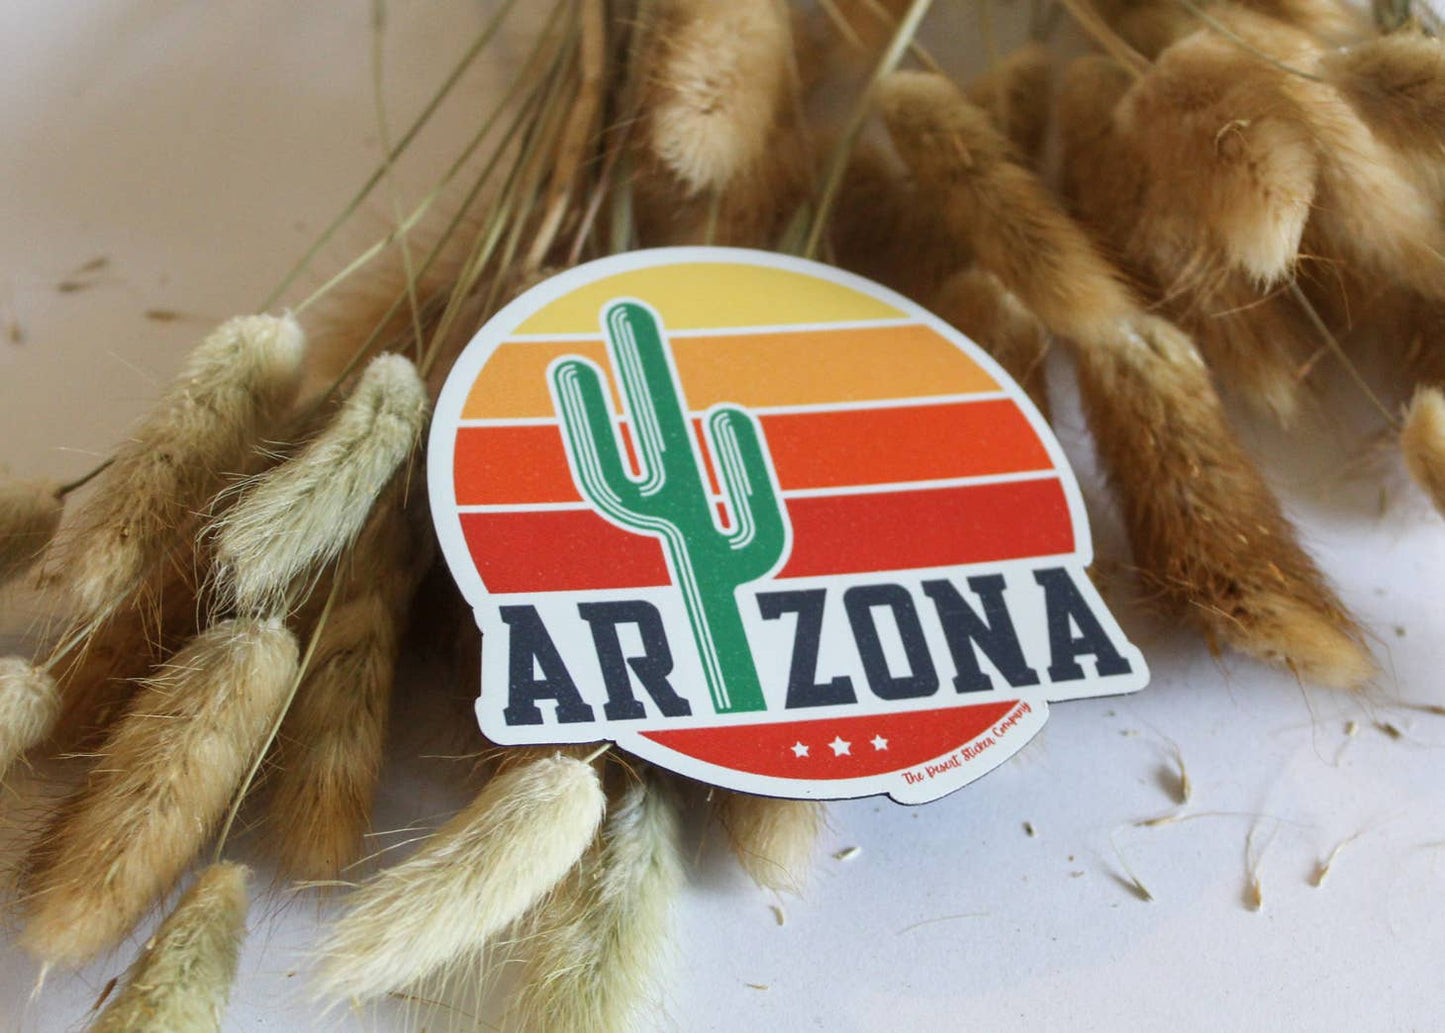 Arizona Vintage Sticker